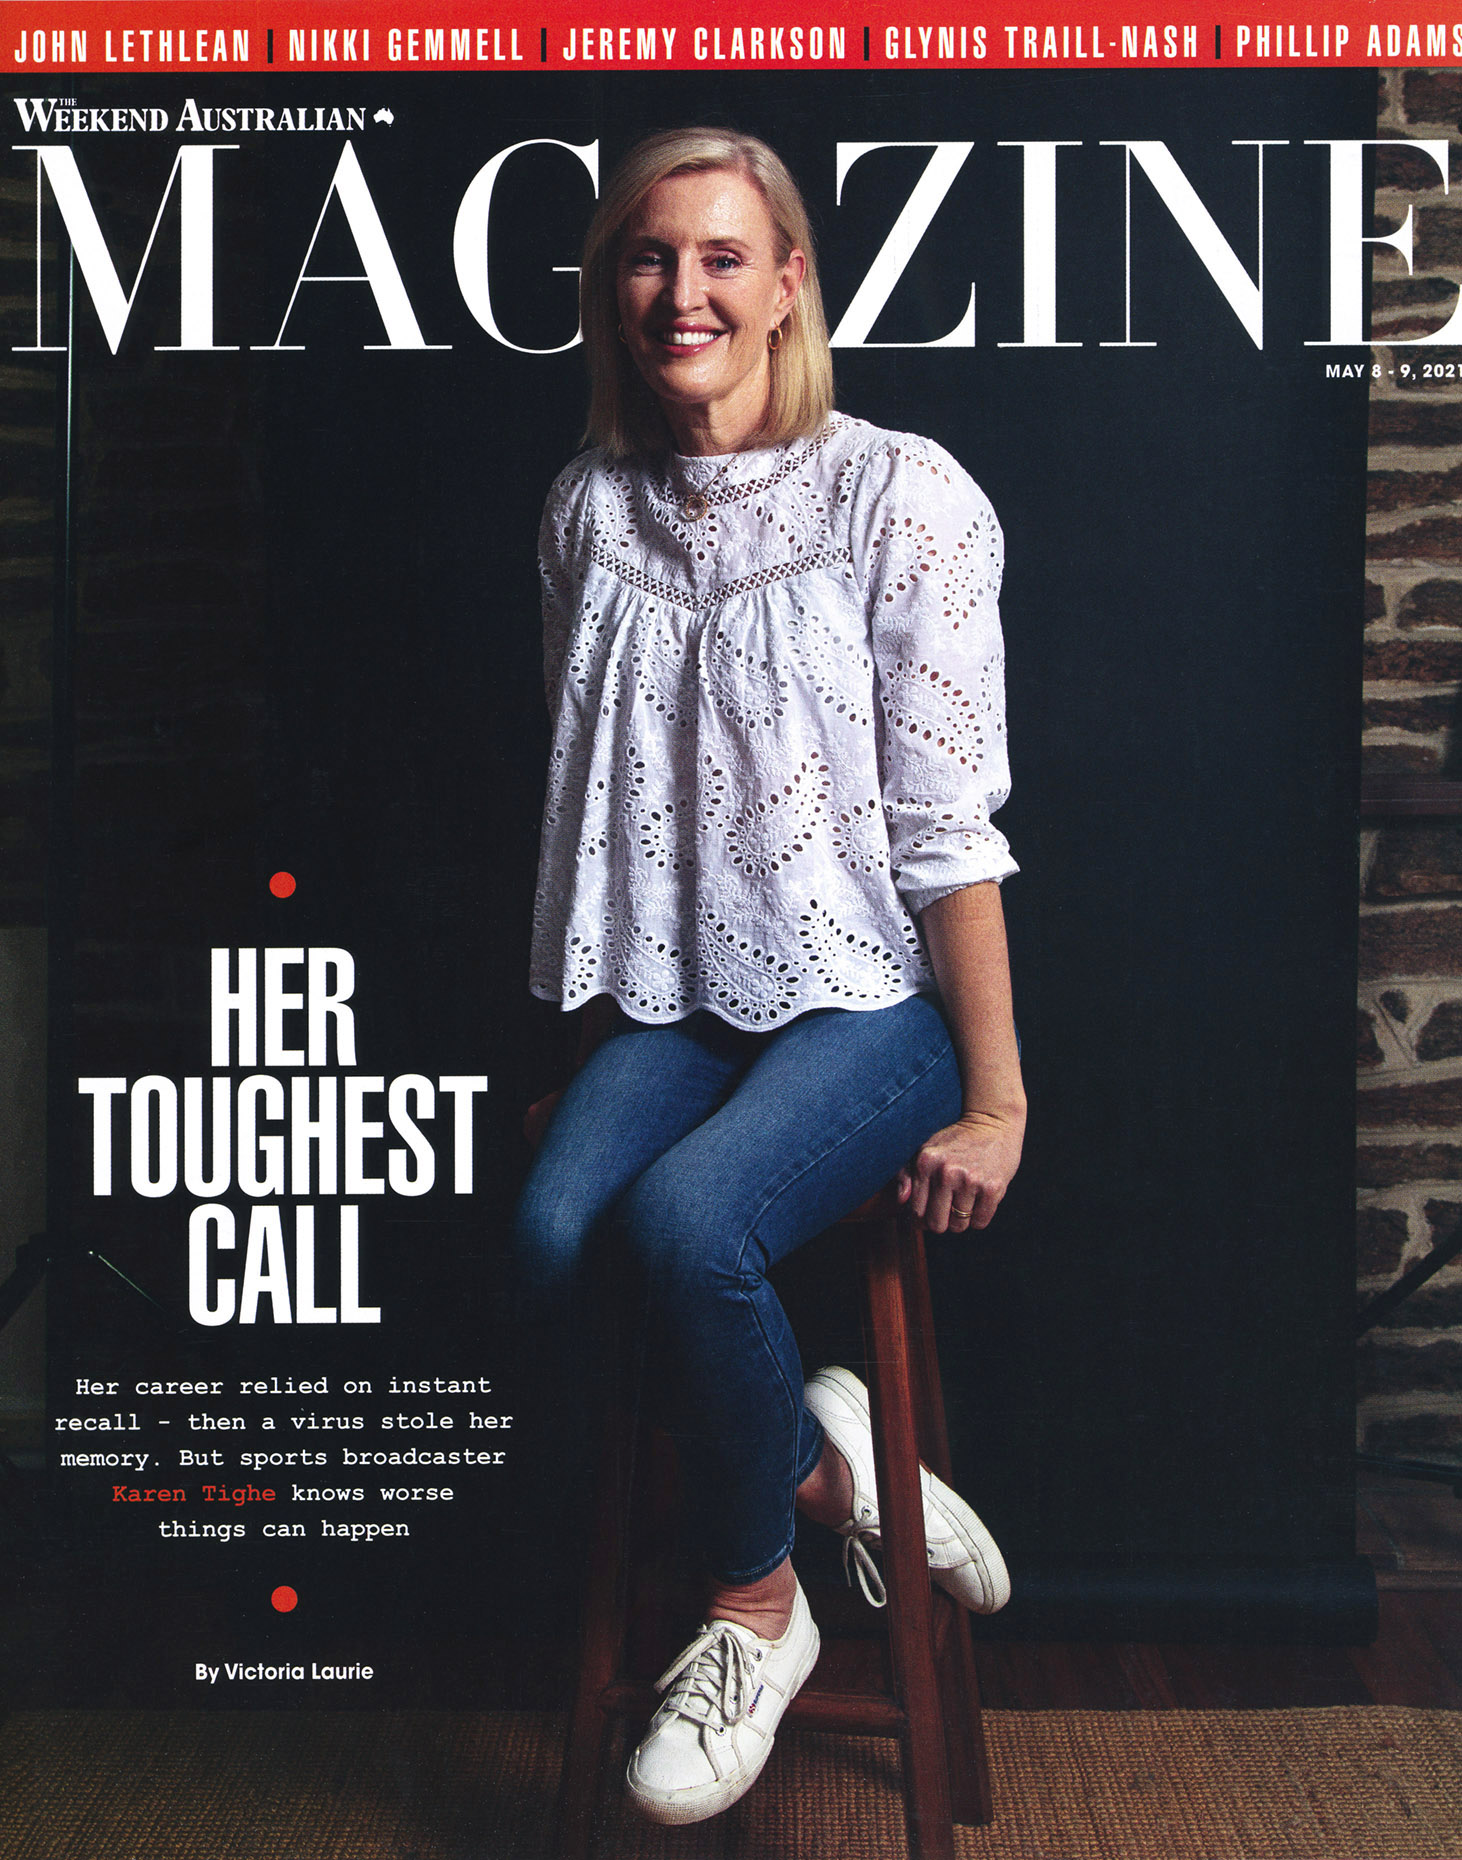 Karen Tighe - cover story The Weekend Australian Magazine 